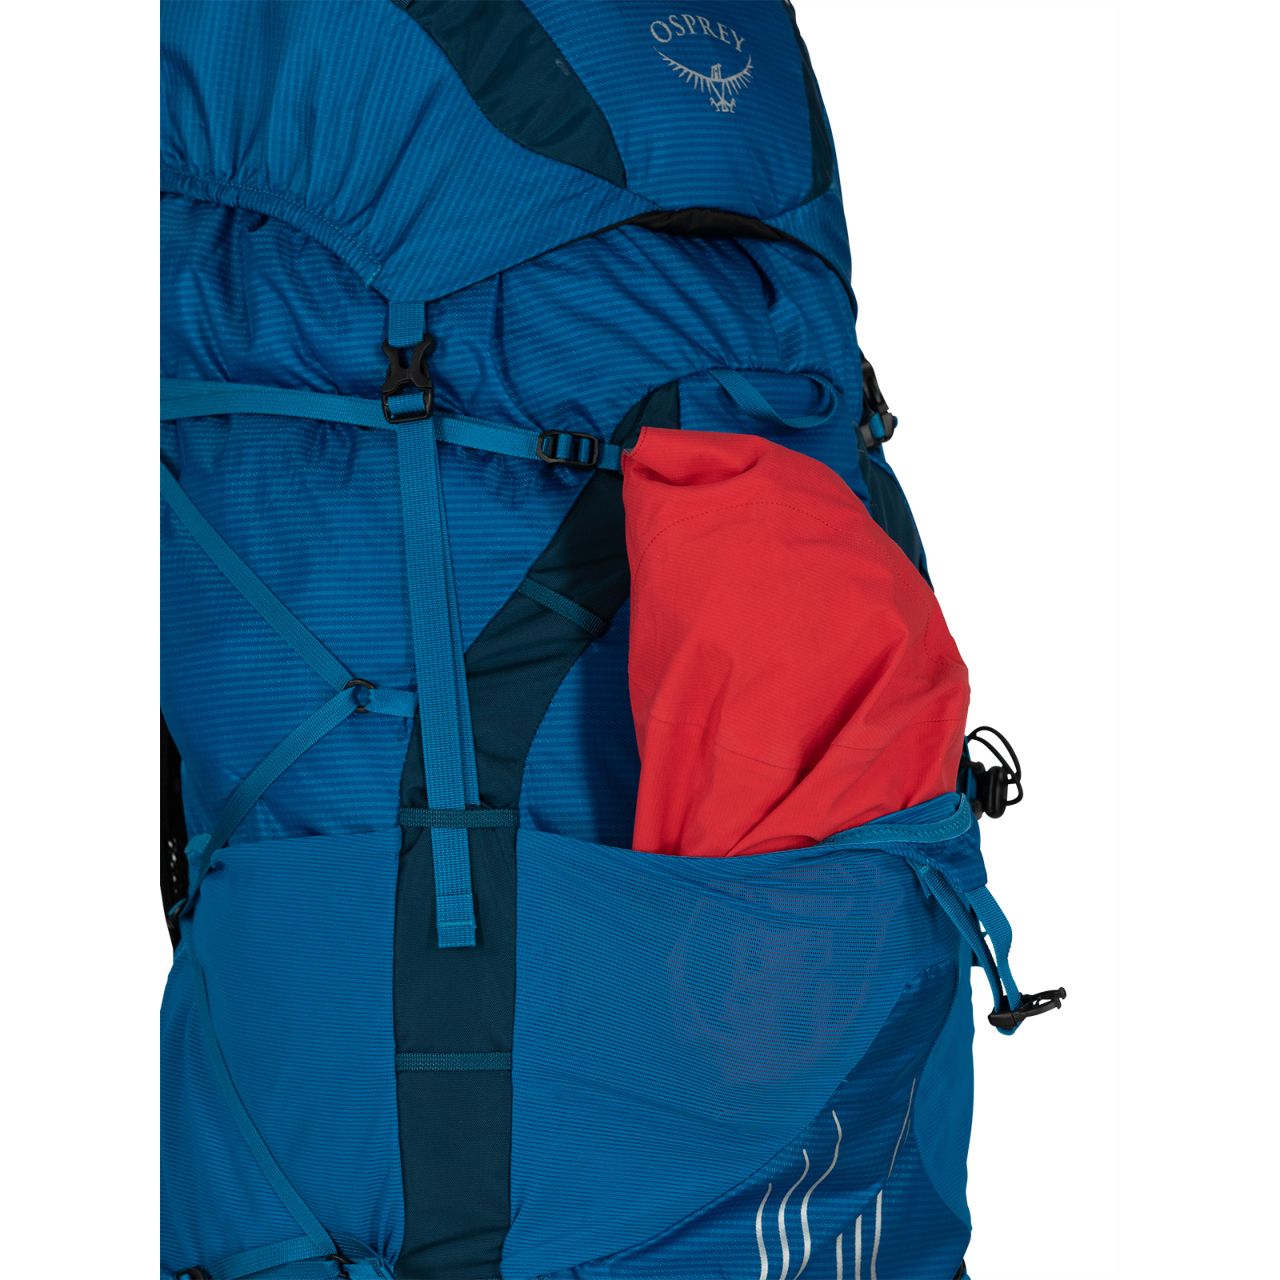 Osprey Packs Exos 38 Backpack (2017 Model), Pacific Blue, Medium